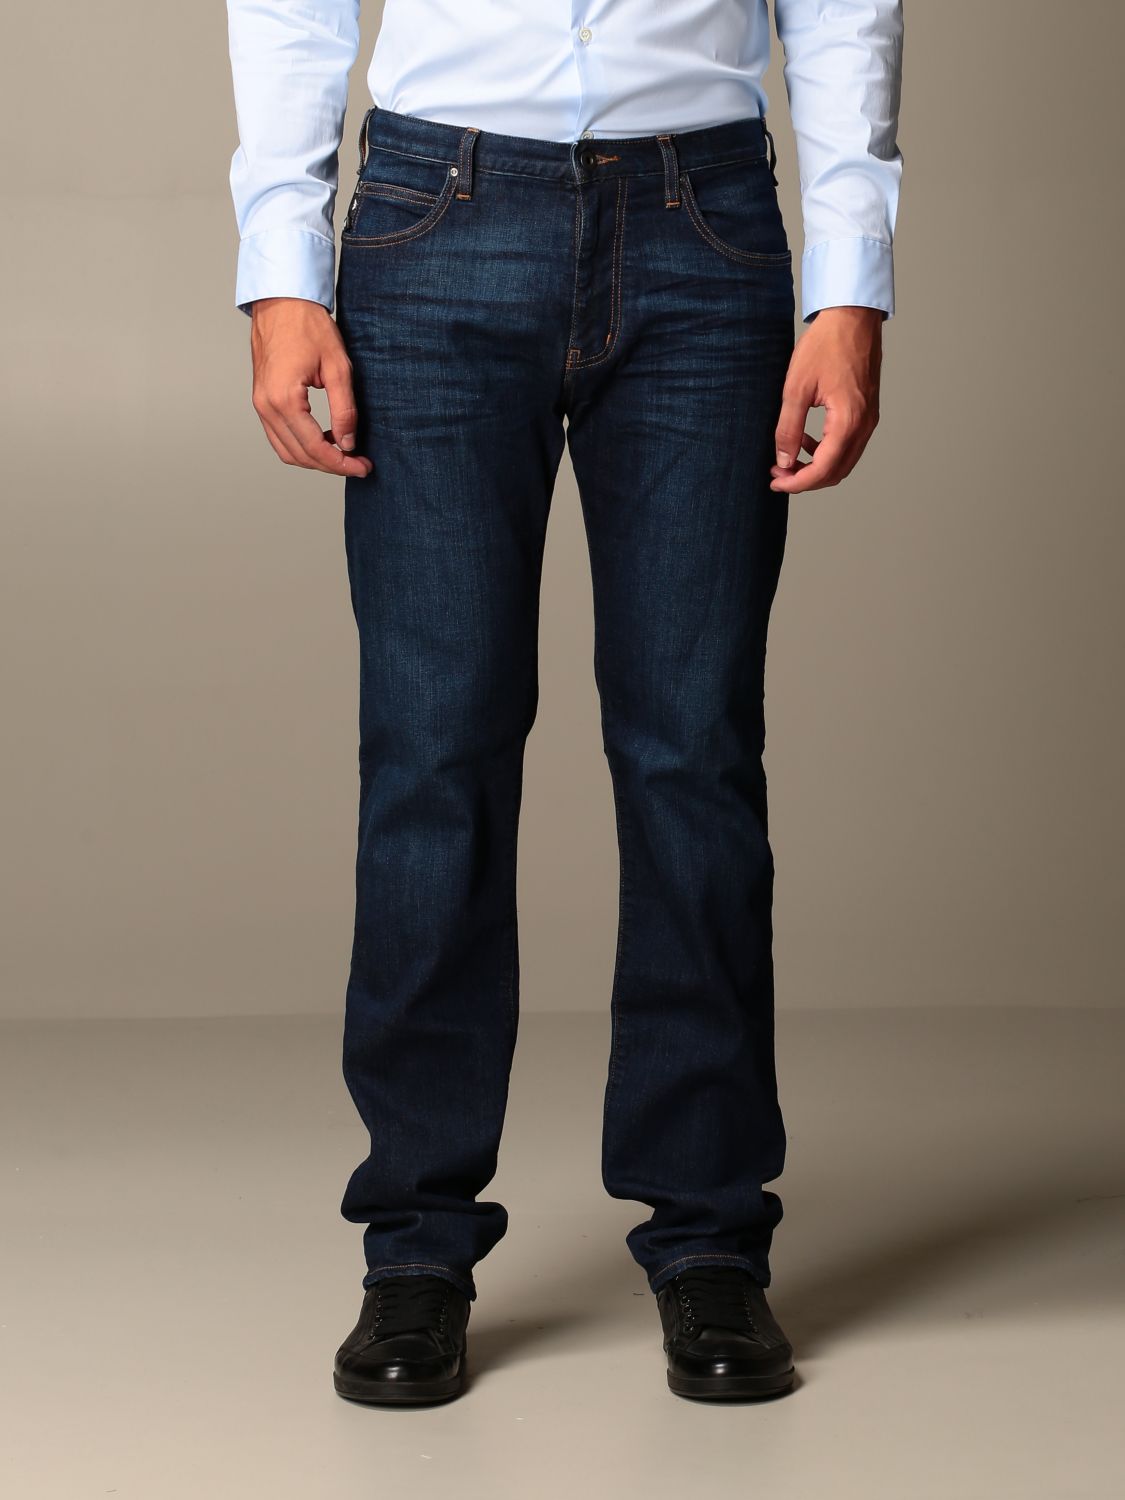 Outlet de Emporio Armani: Jeans para hombre, Denim | Jeans Emporio Armani 8N1J45 1V0LZ en línea GIGLIO.COM